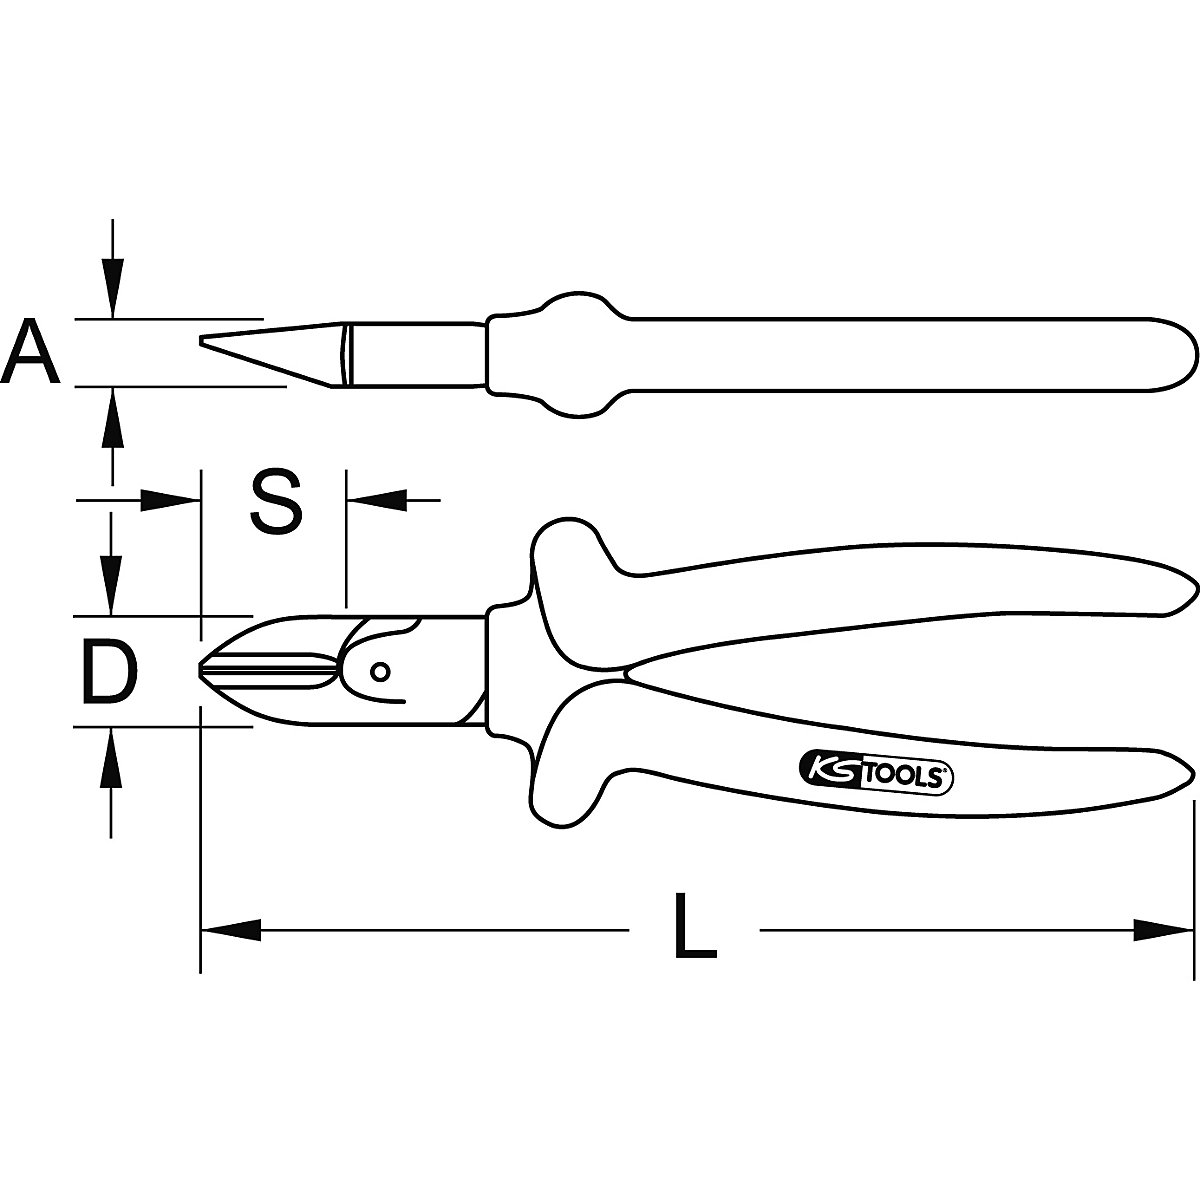 Clește de tăiat lateral cu vârf diagonal SlimPOWER – KS Tools (Imagine produs 2)-1